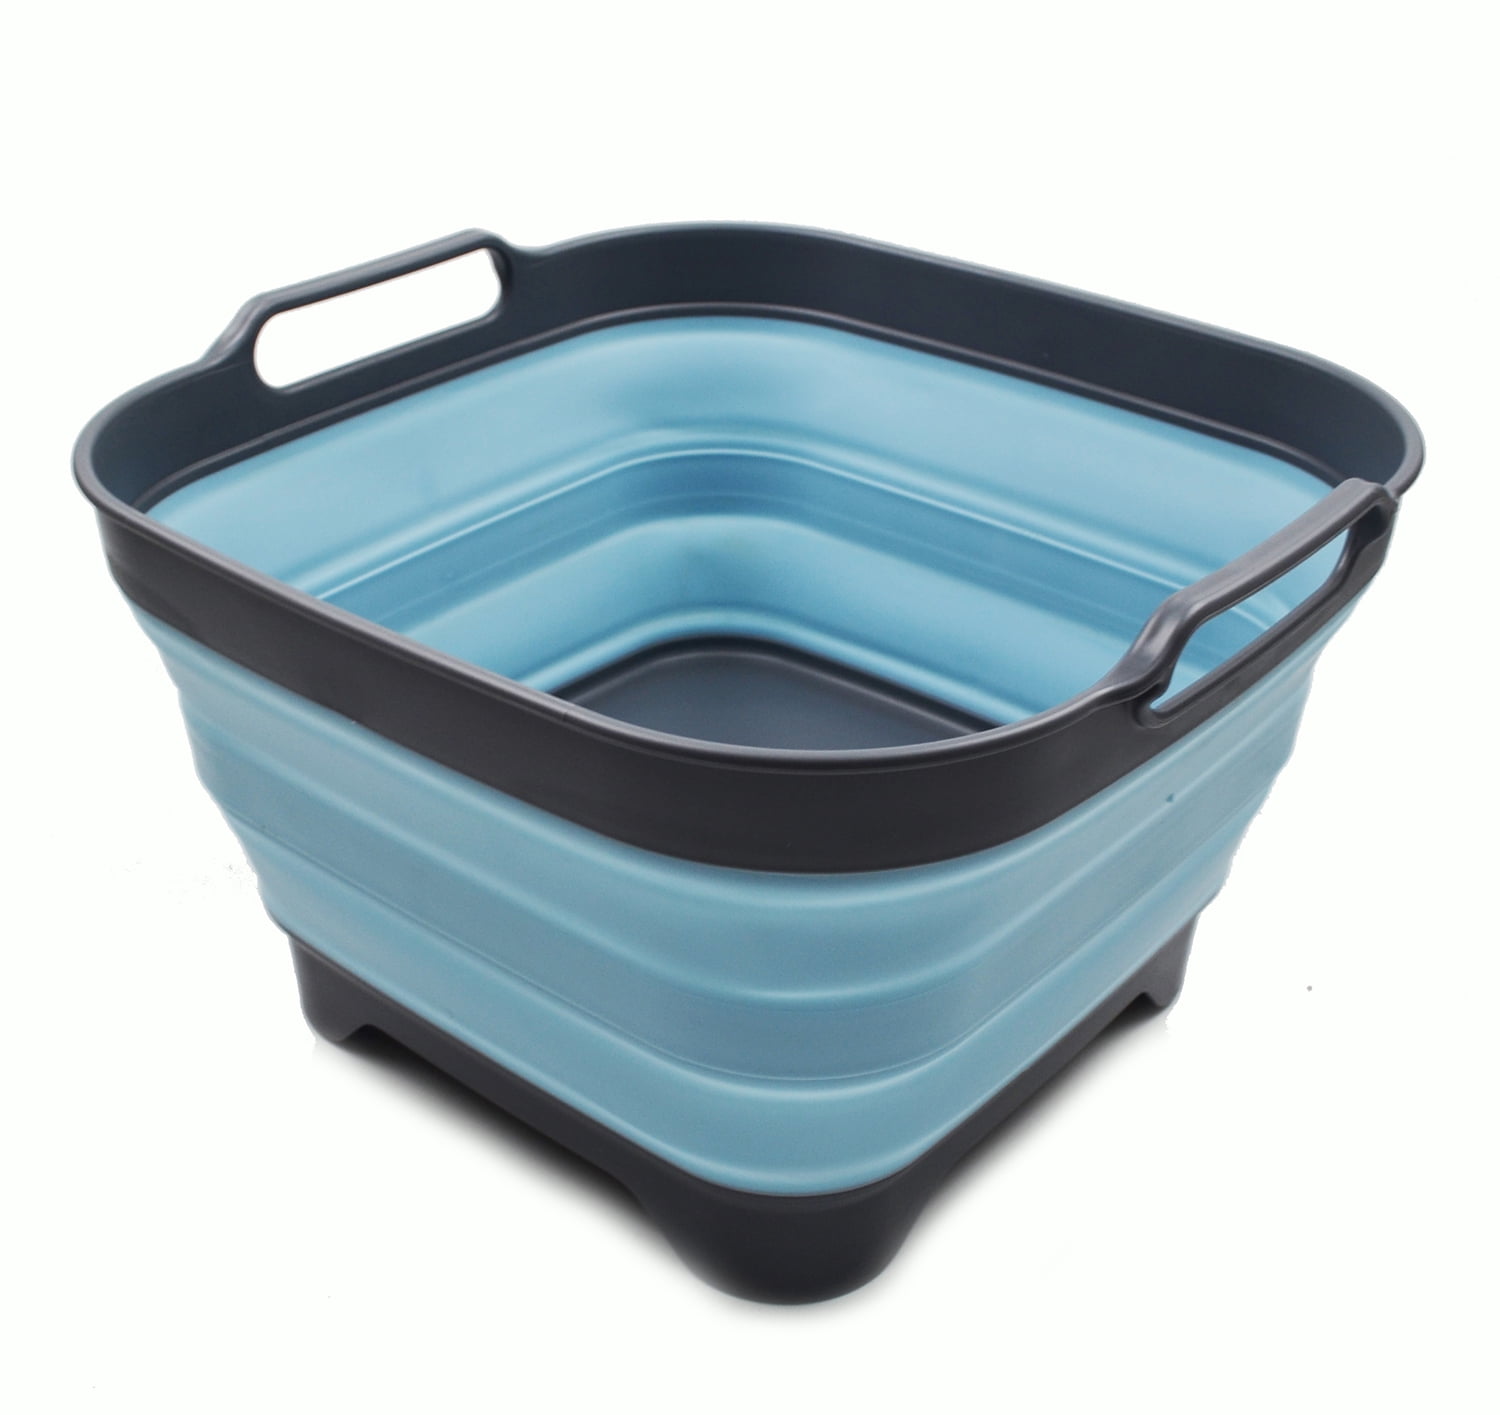 Portable Dish Washing Tub 1, Bright Blue Space Saving Kitchen Storage Tray Foldable Washing Basin SAMMART Collapsible Dishpan with Draining Plug 